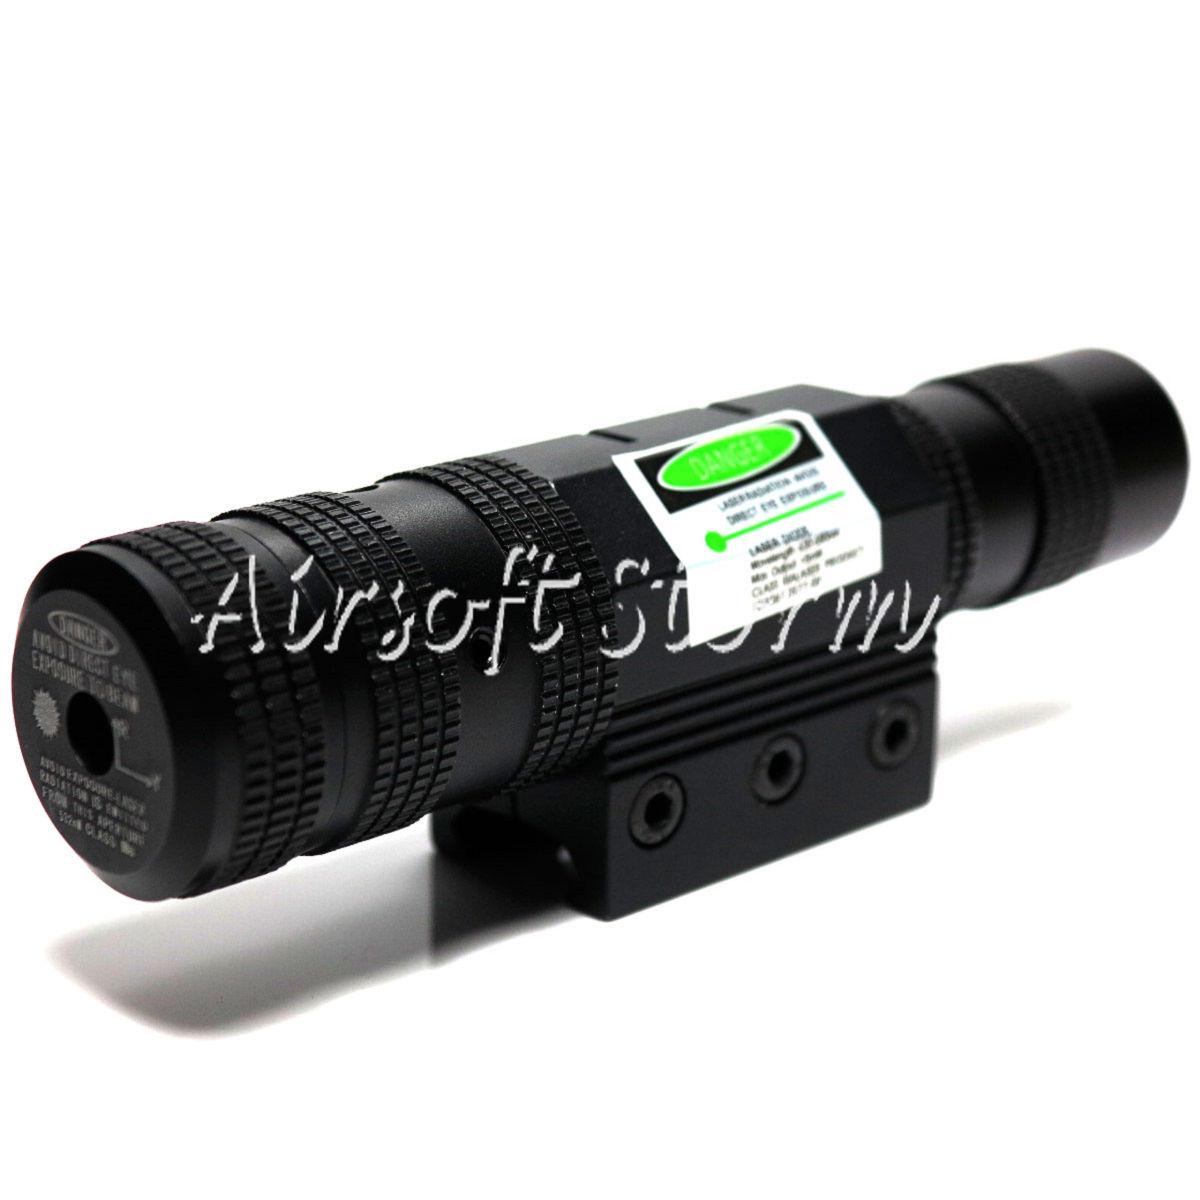 LXGD Tactical Gear High Power Visible Green Laser Sight Pointer JG-038